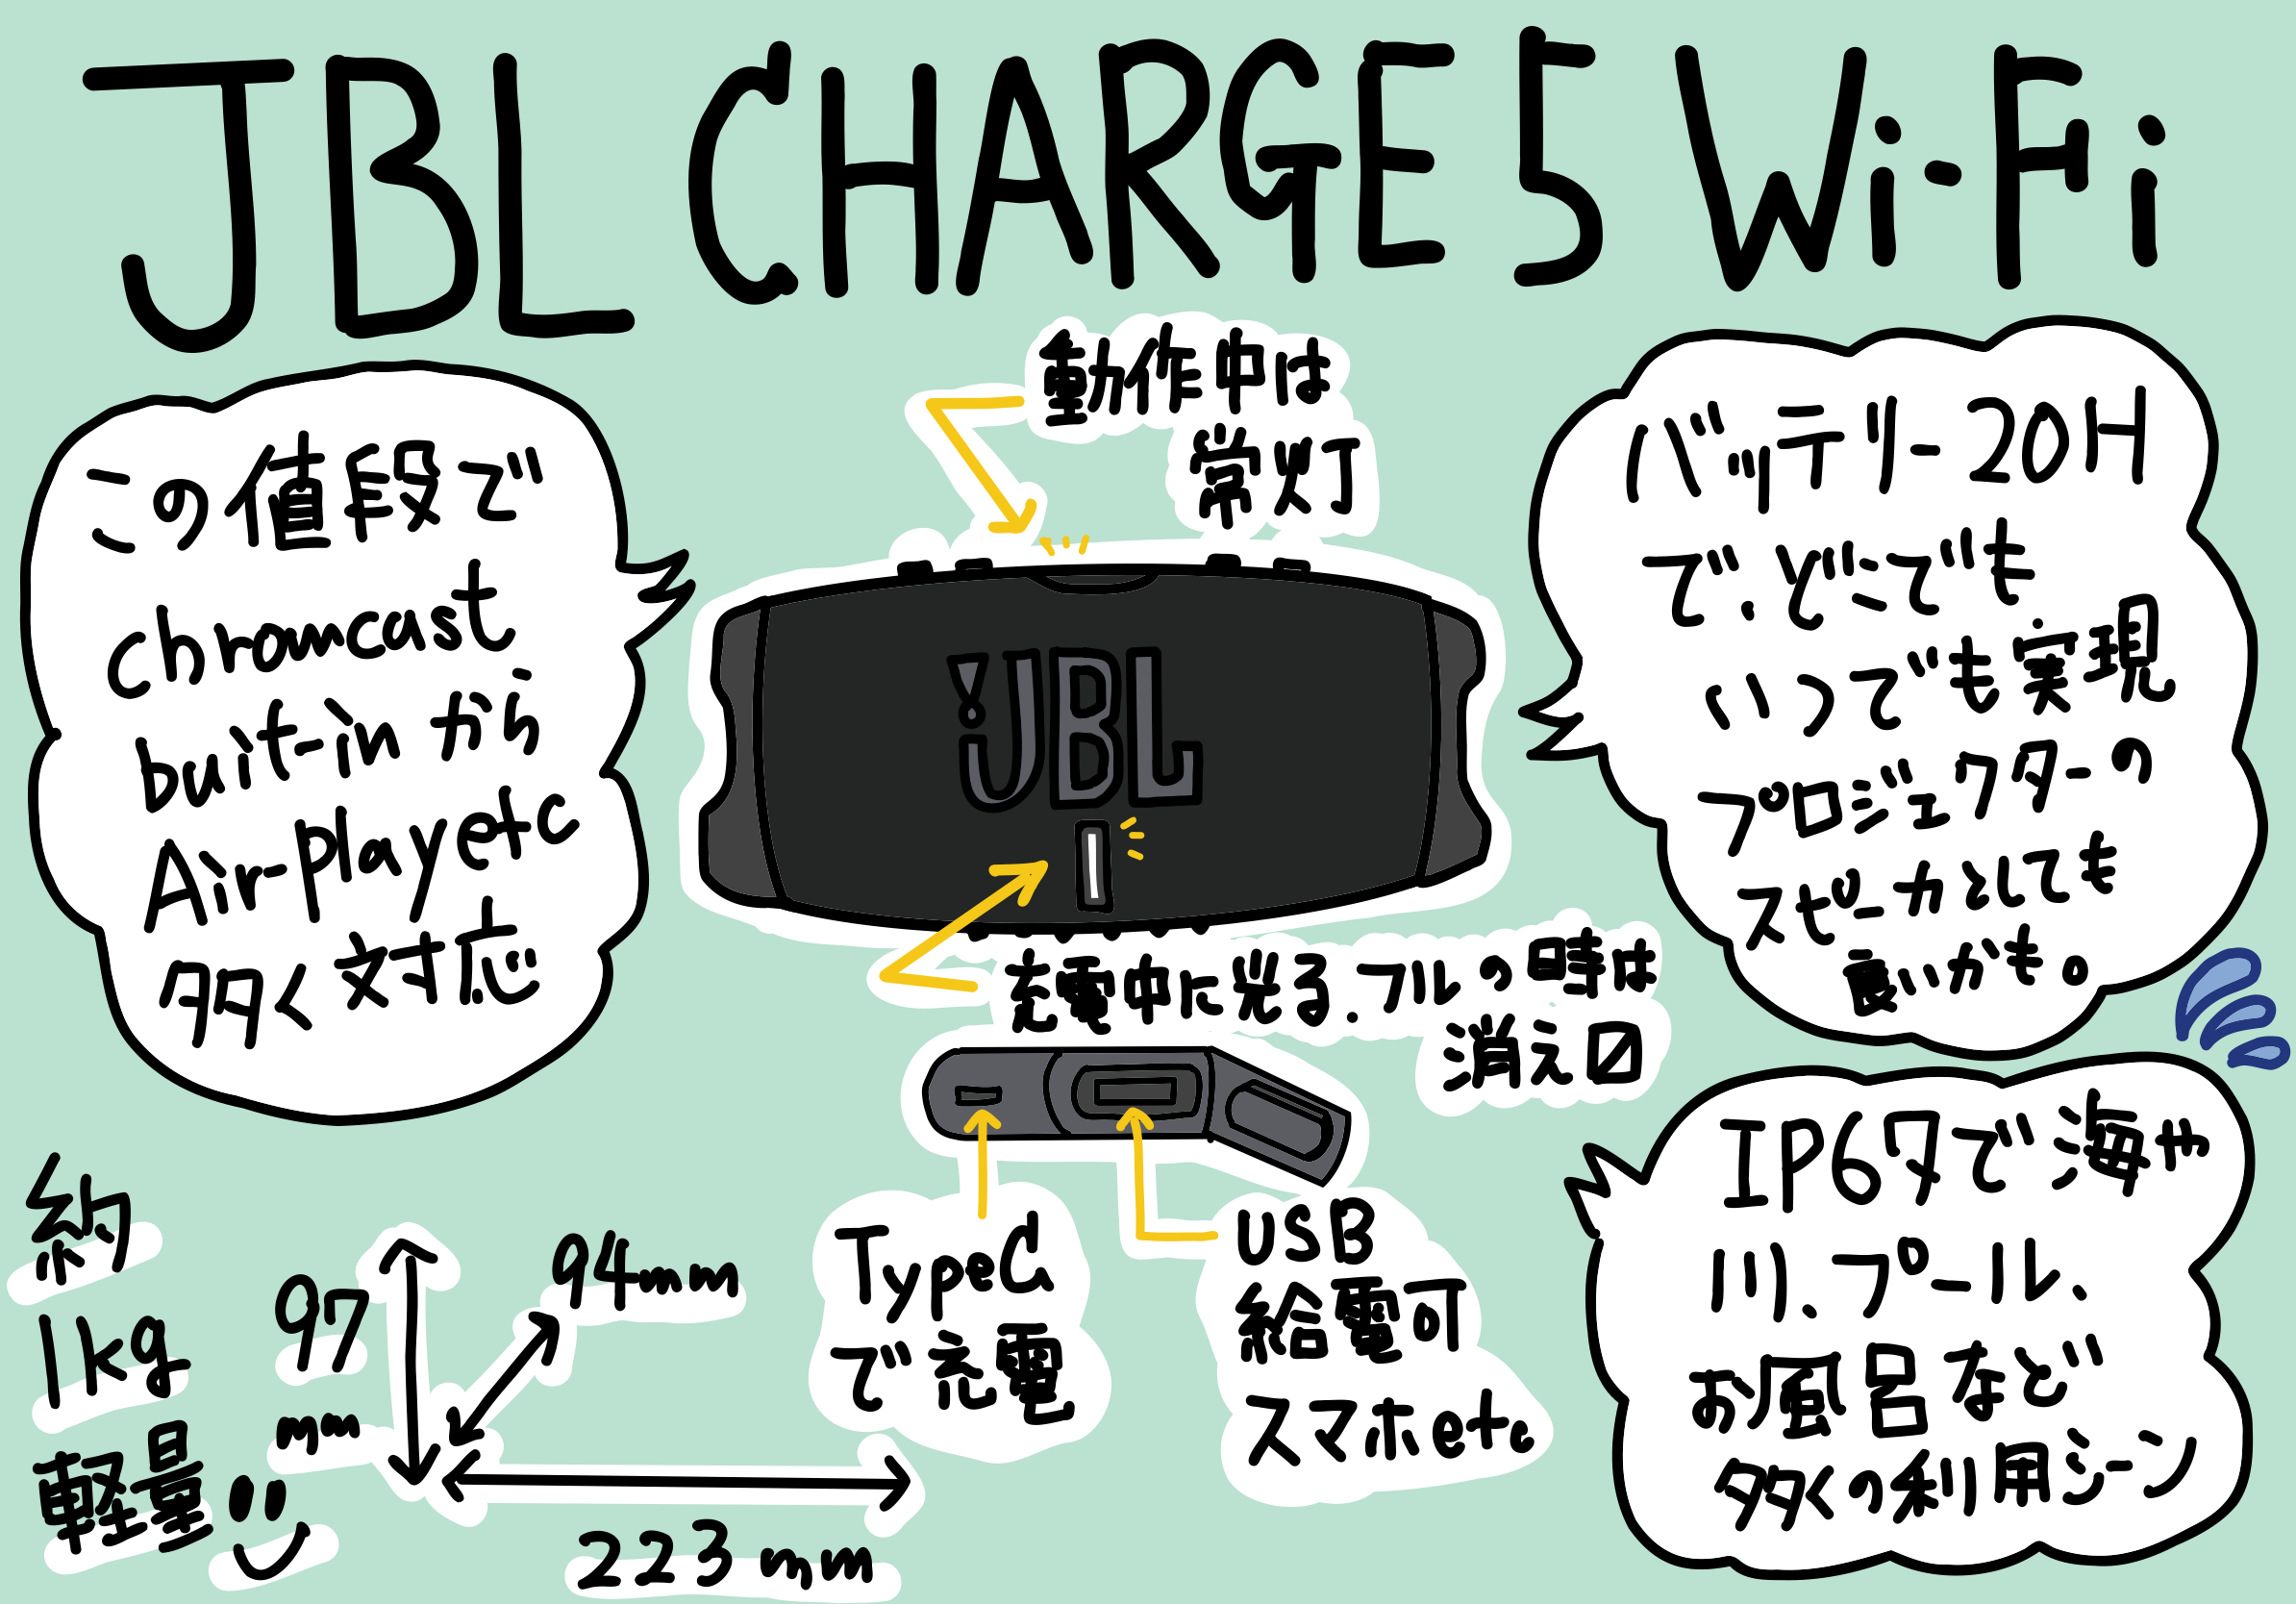 JBL CHARGE 5 Wi-Fi が良い 今では貴重な Chromecast built-in